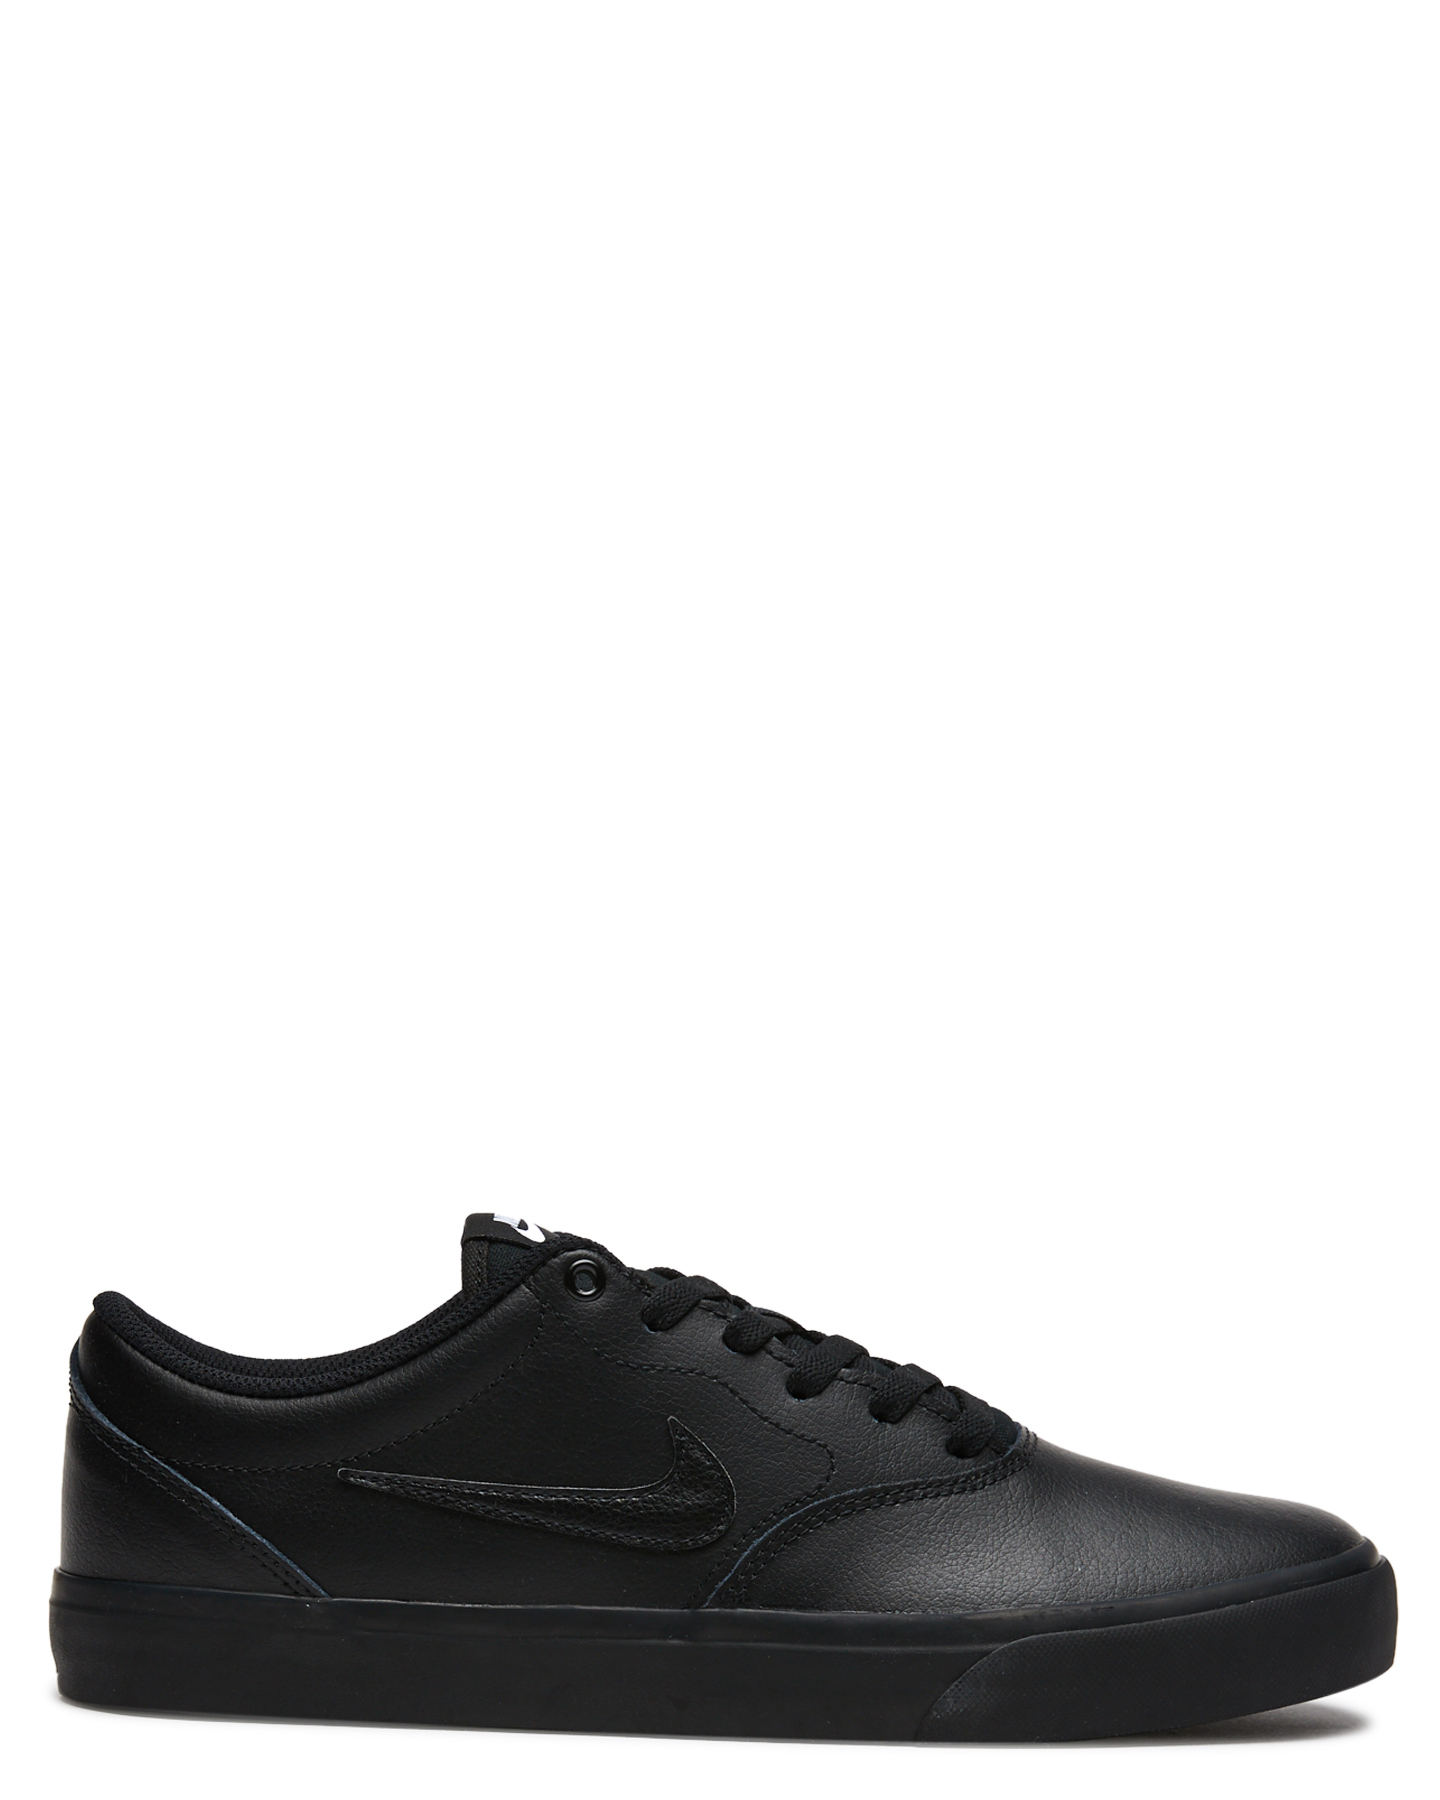 nike sb black leather shoes